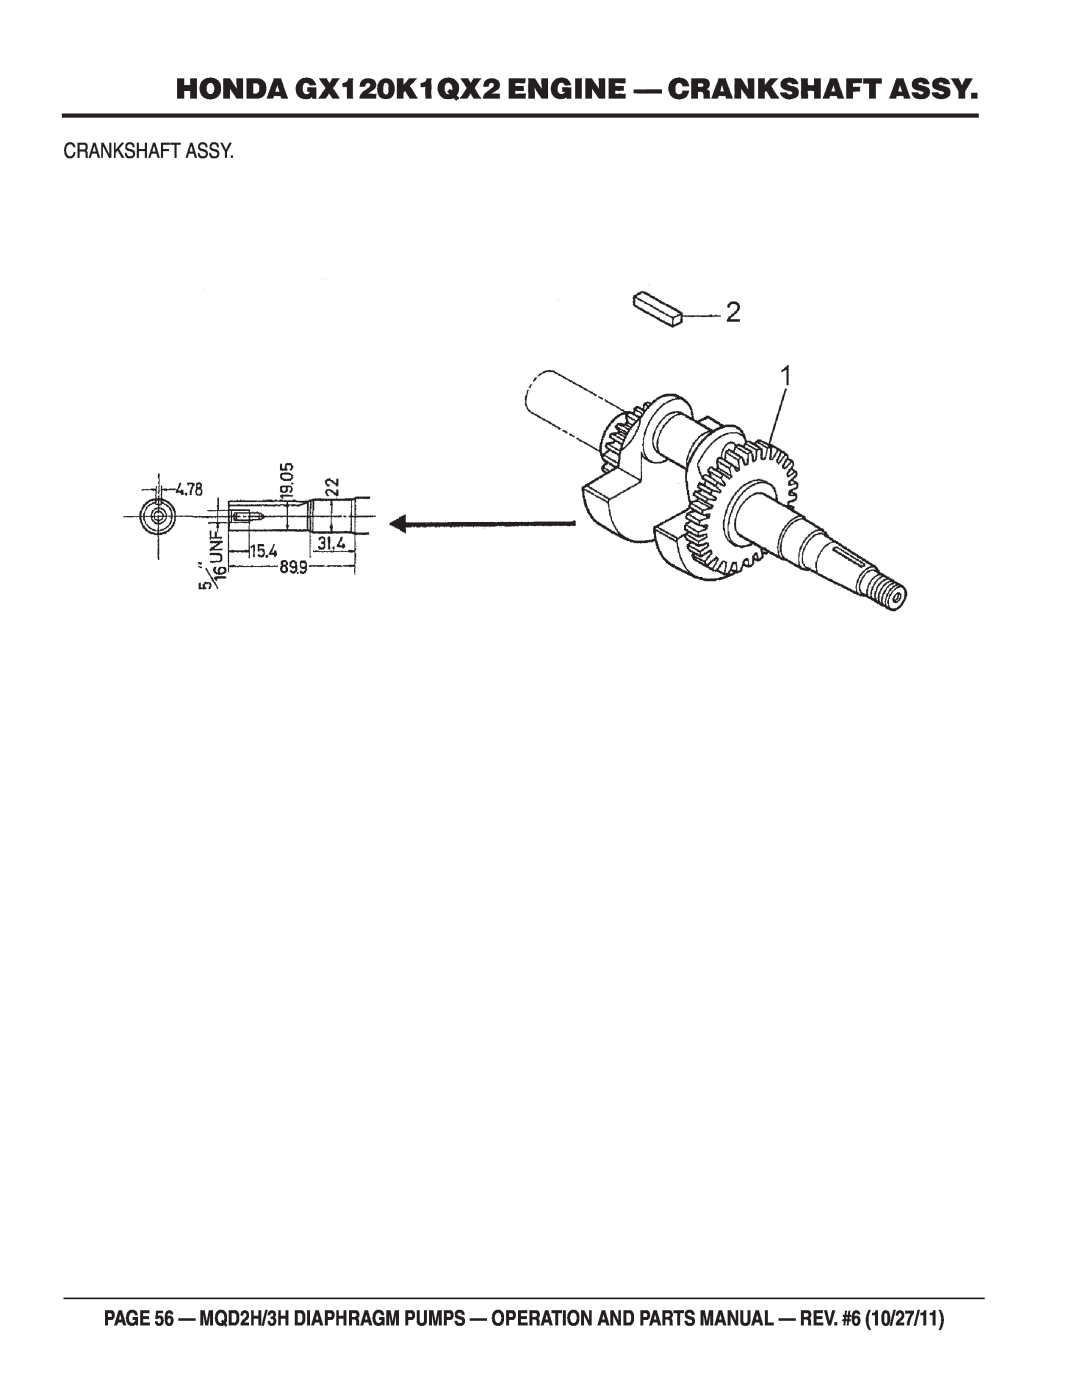 Multiquip MQD2H manual HONDA GX120K1QX2 ENGINE - CRANKSHAFT ASSY, Crankshaft Assy 